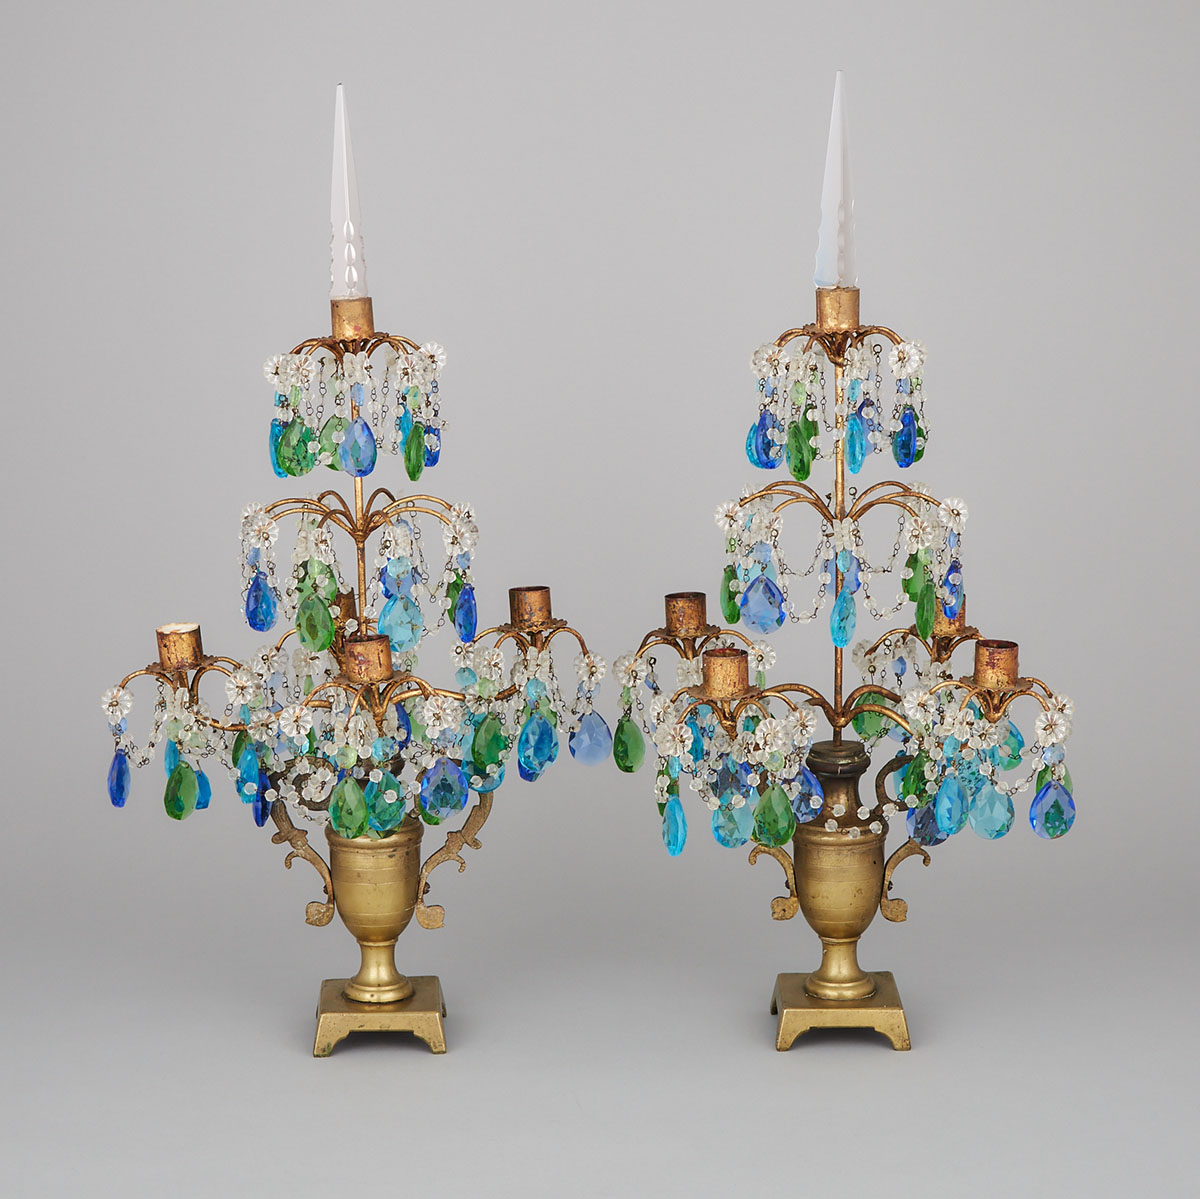 Pair of Italian Gilt Metal and Coloured Glass Girandoles, early-mid 20th century